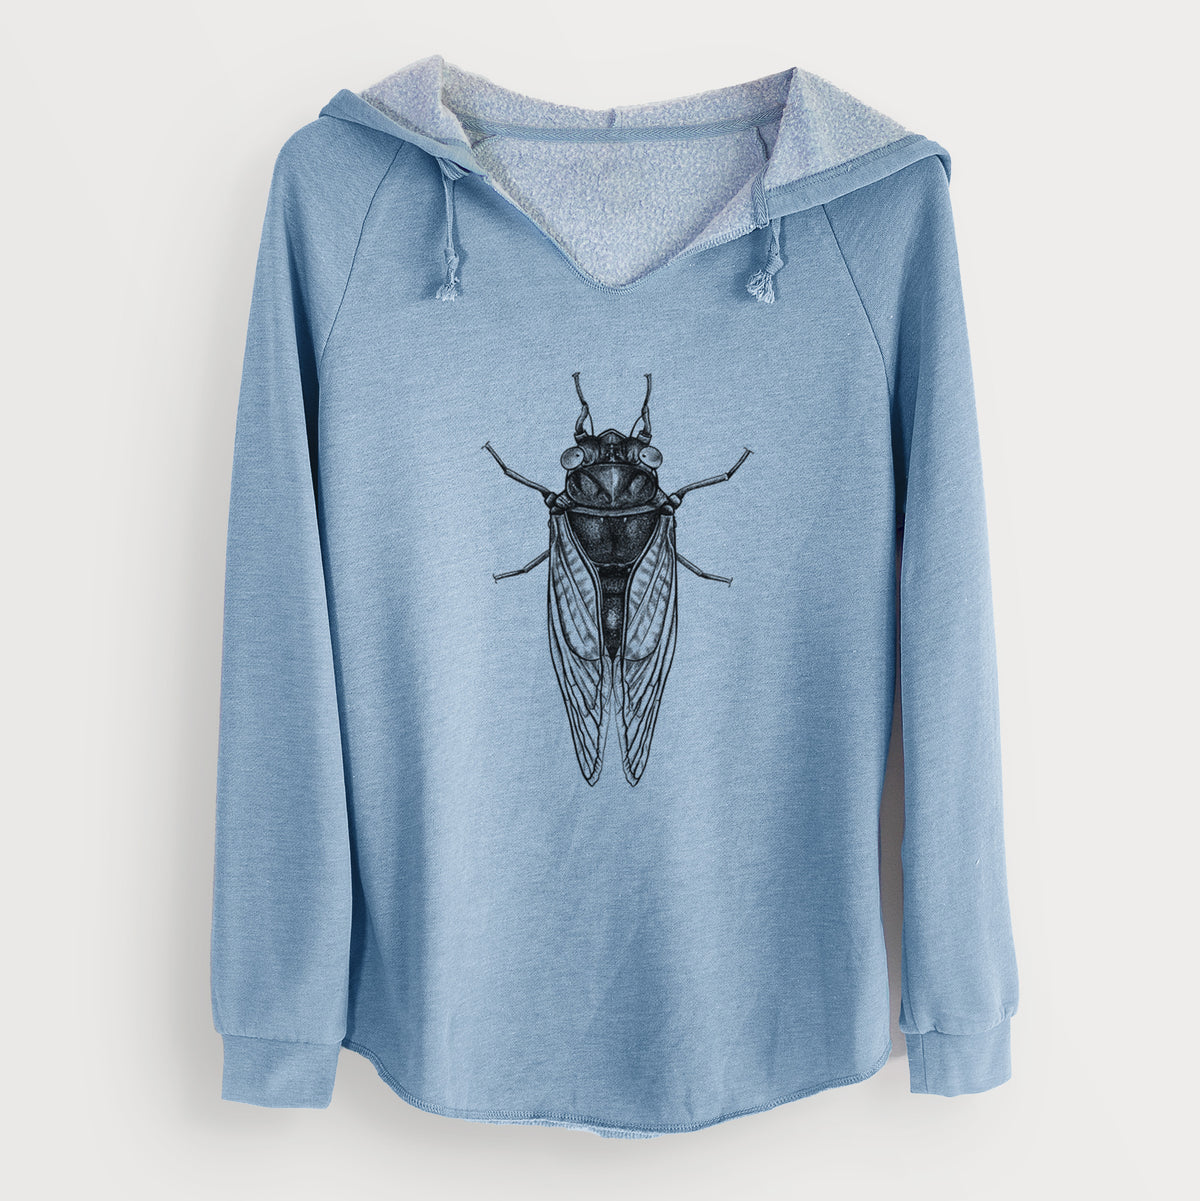 Pharoh Cicada - Magicicada septendecim - Cali Wave Hooded Sweatshirt